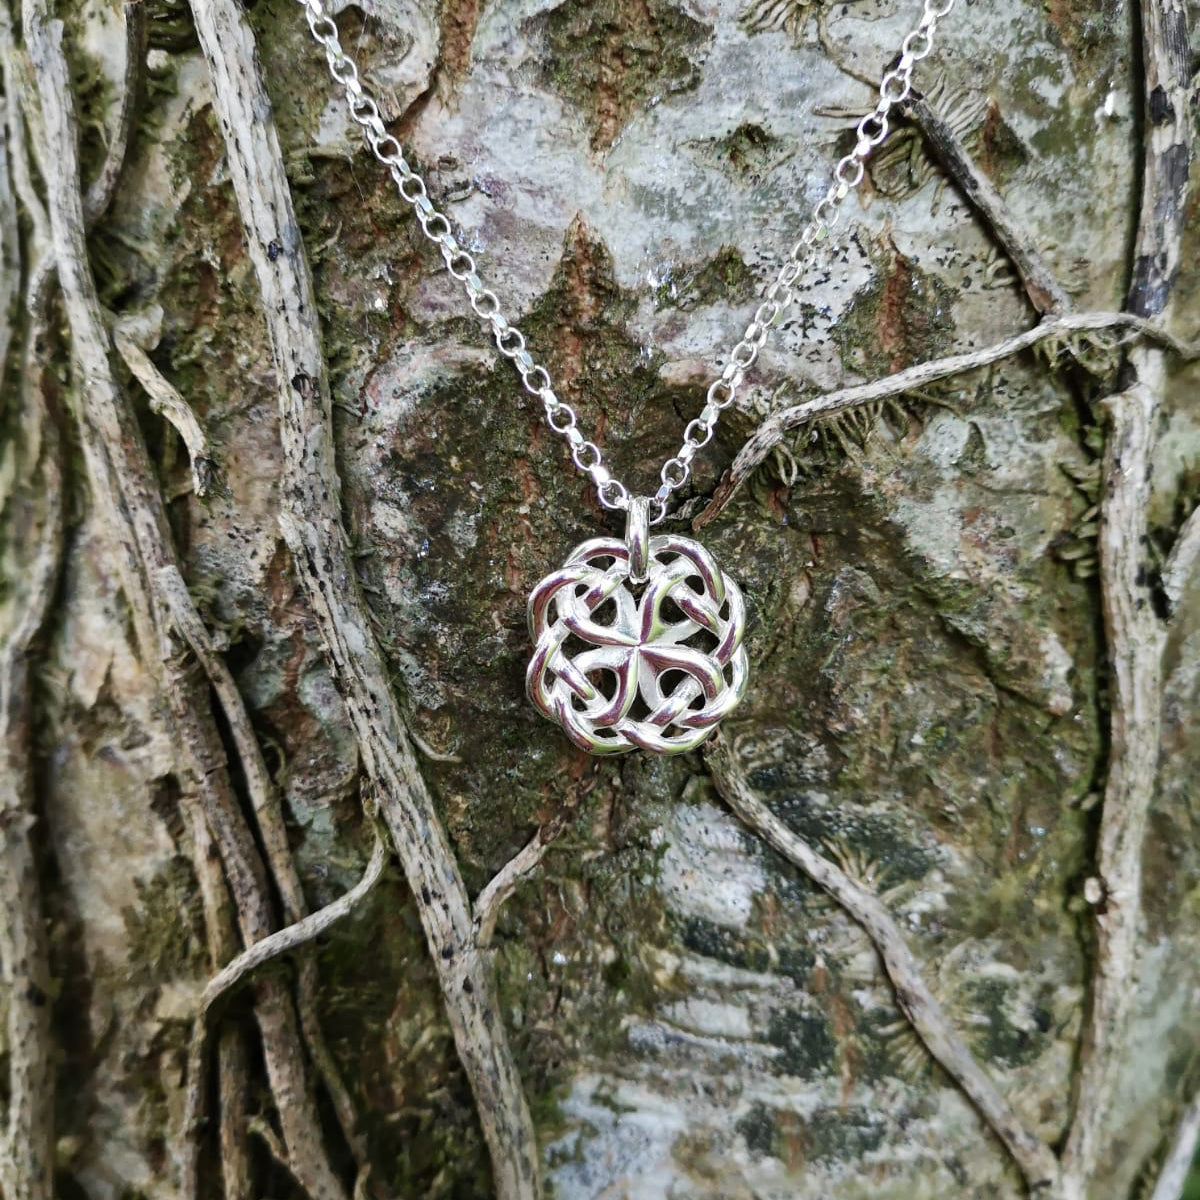 Tiffany Twist knot pendant in sterling silver. | Tiffany & Co.